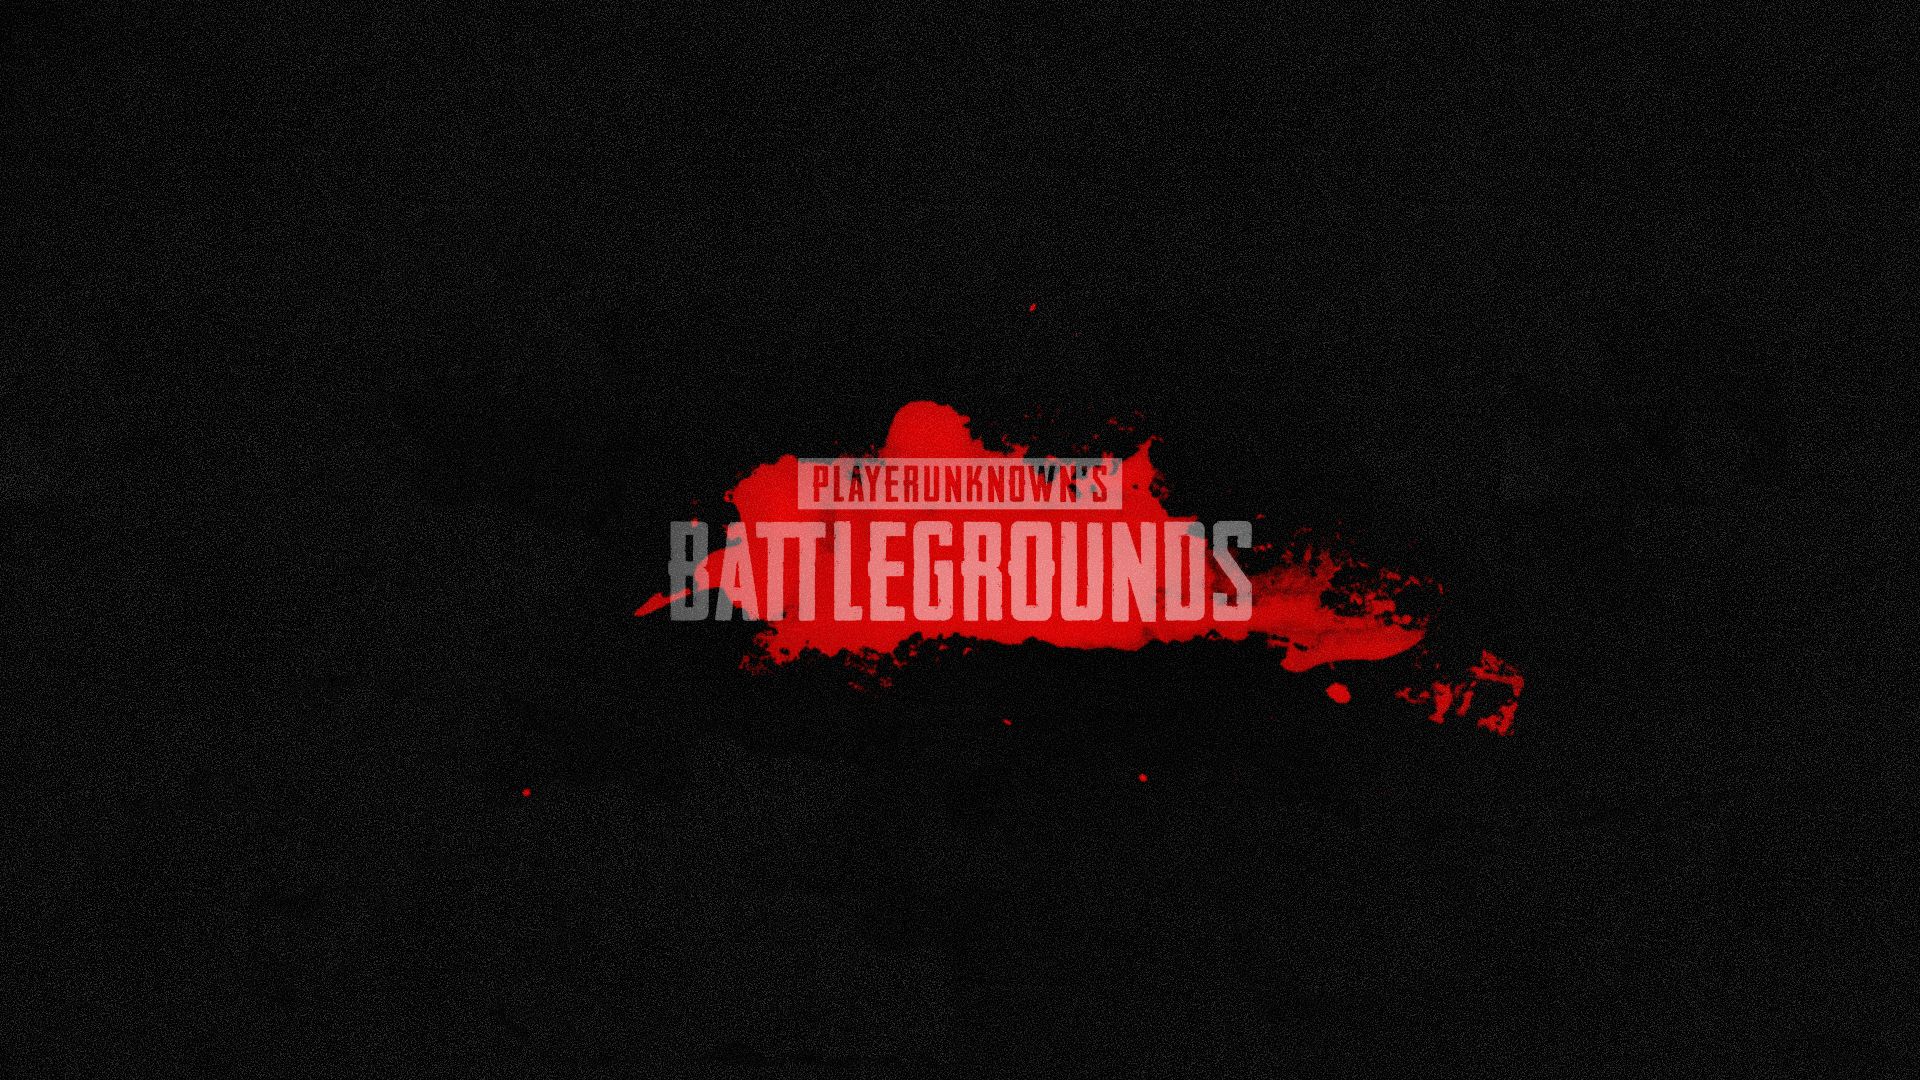 876632 descargar imagen videojuego, playerunknown's battlegrounds: fondos de pantalla y protectores de pantalla gratis